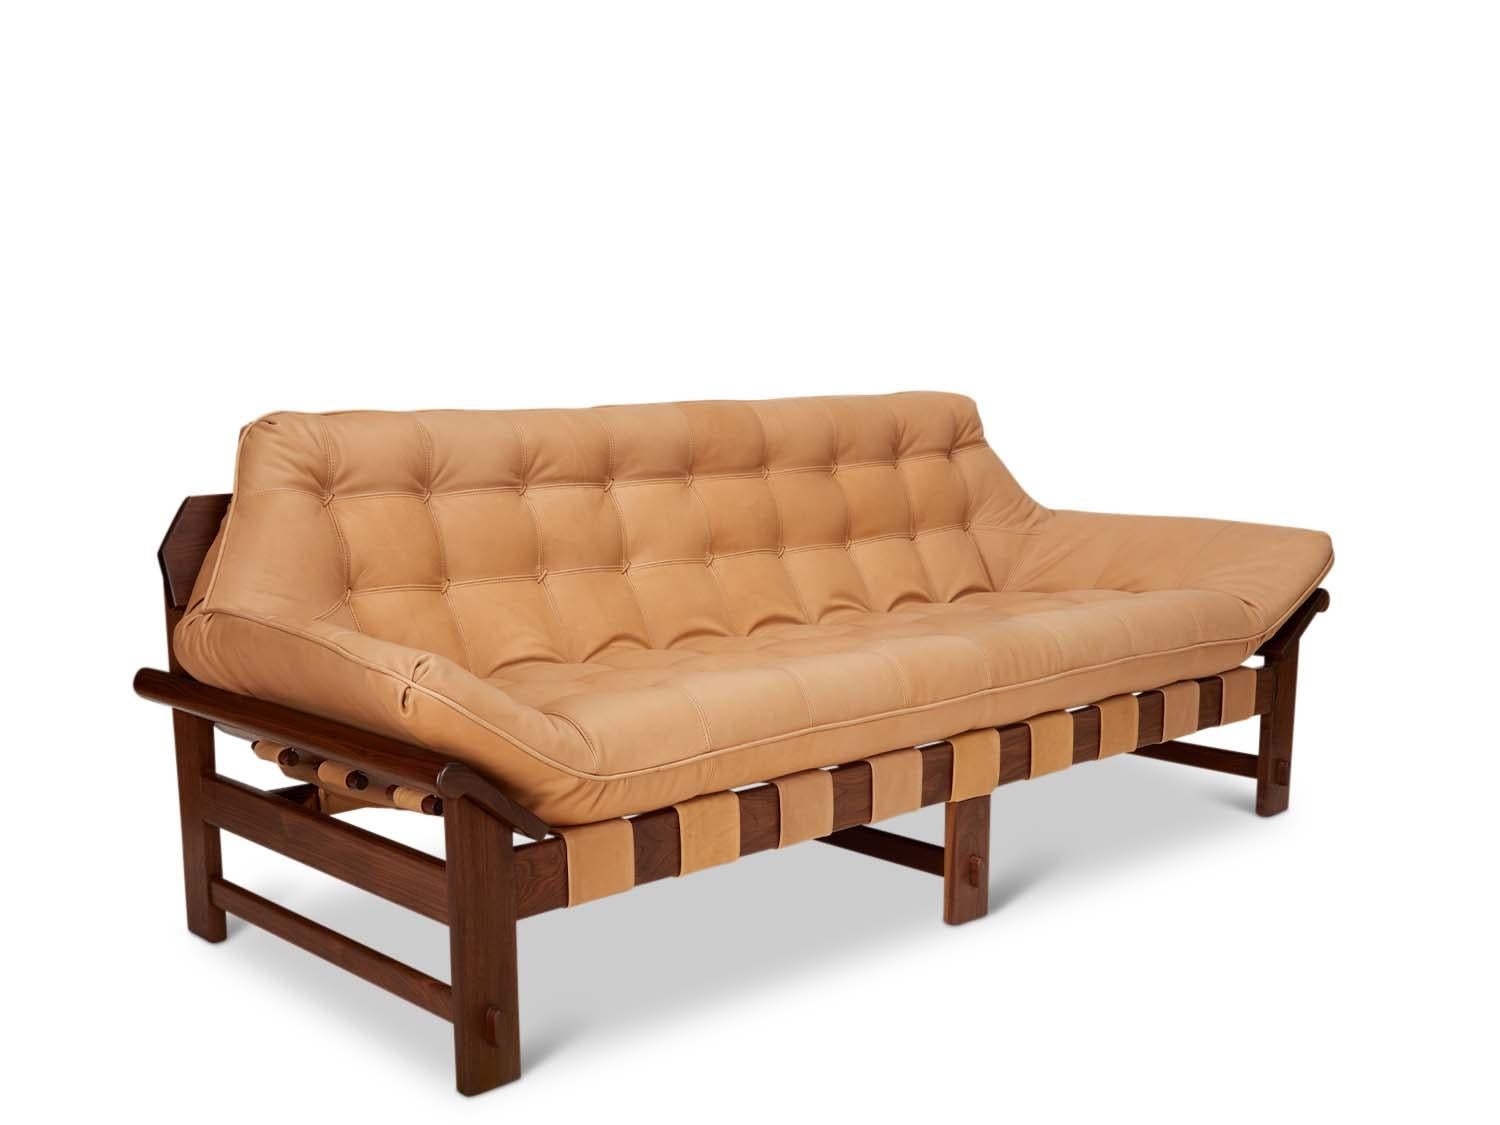 Mid-Century Modern Tan Leather and Walnut Ojai Sofa by Lawson-Fenning For Sale